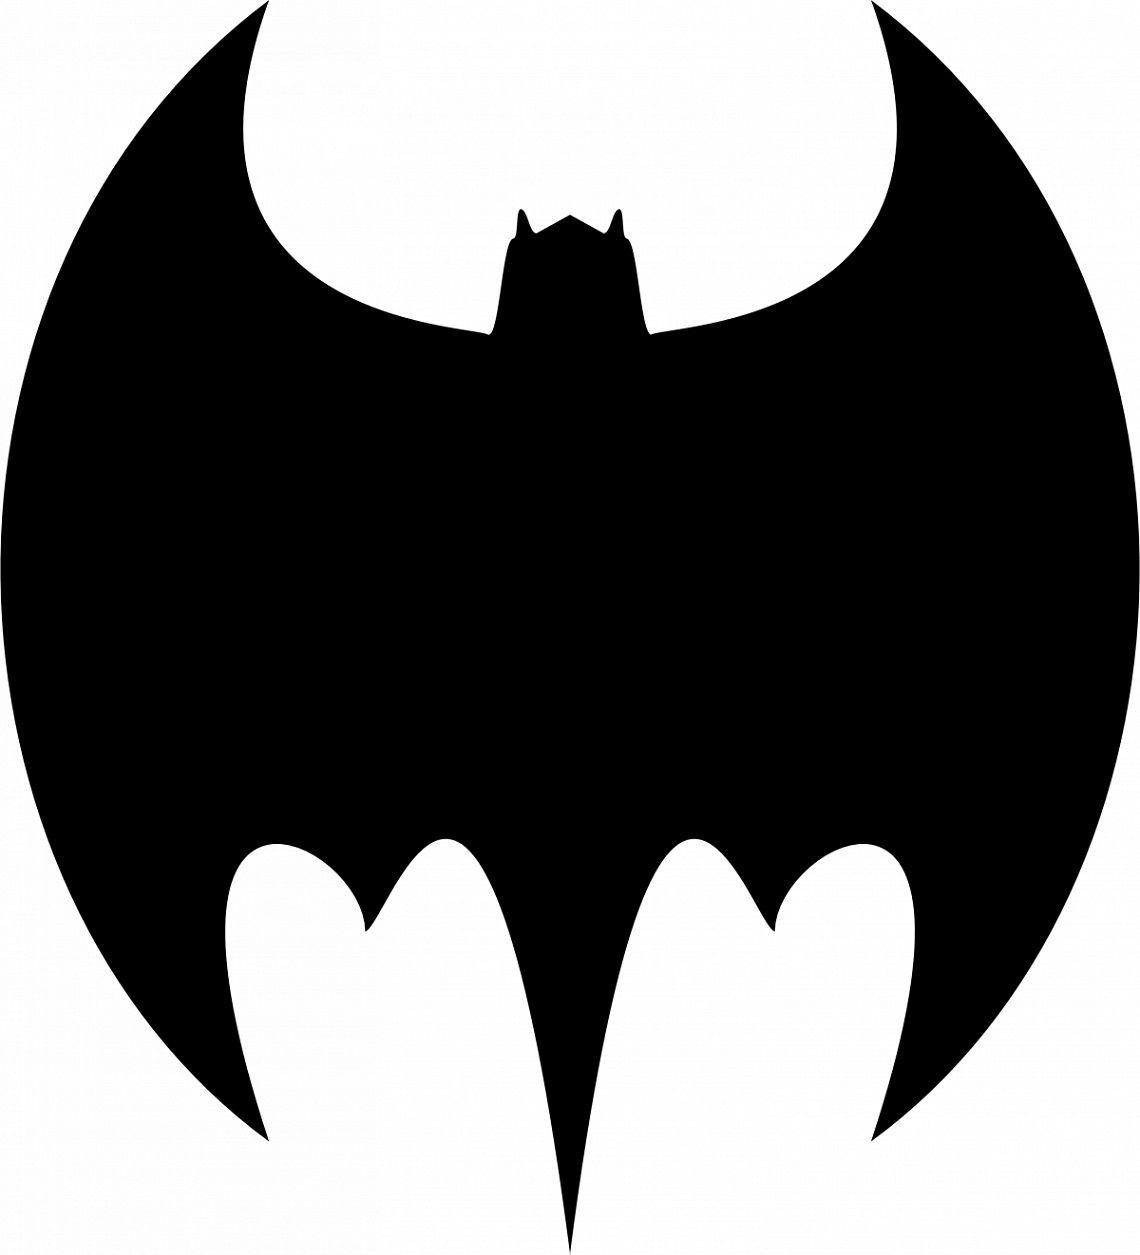 Batman Logo - The incredible 75-year evolution of the Batman logo | Business Insider